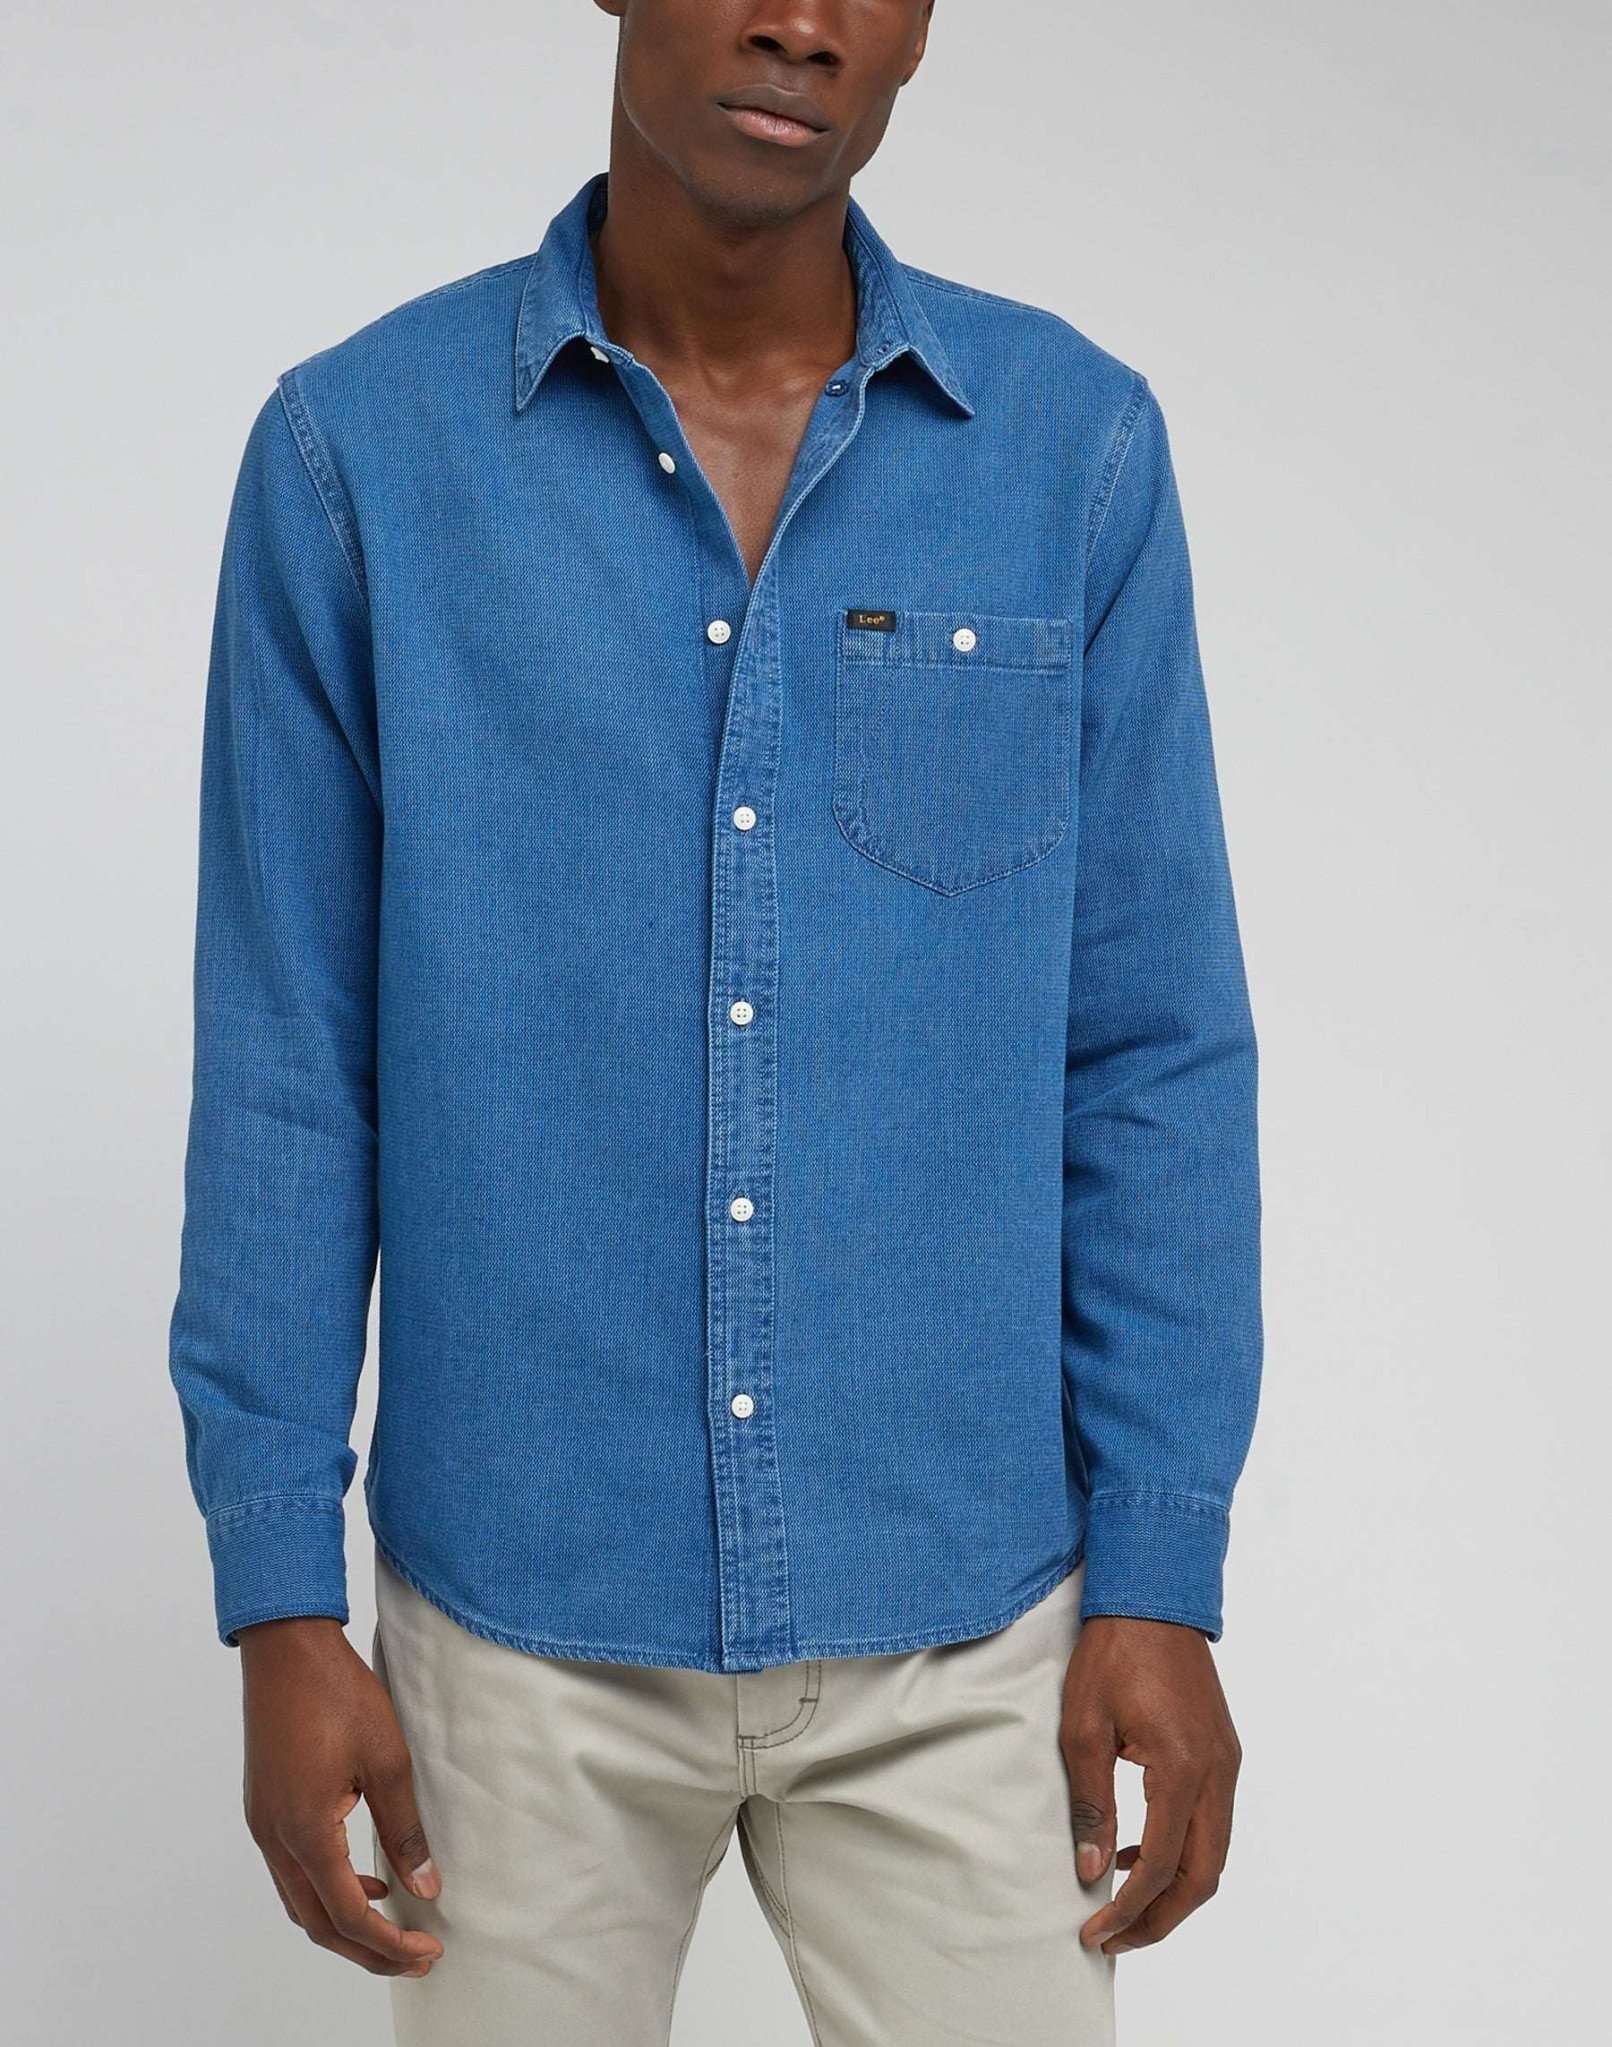 Riveted Shirt in Anthem Blue Jeanshemden Lee   